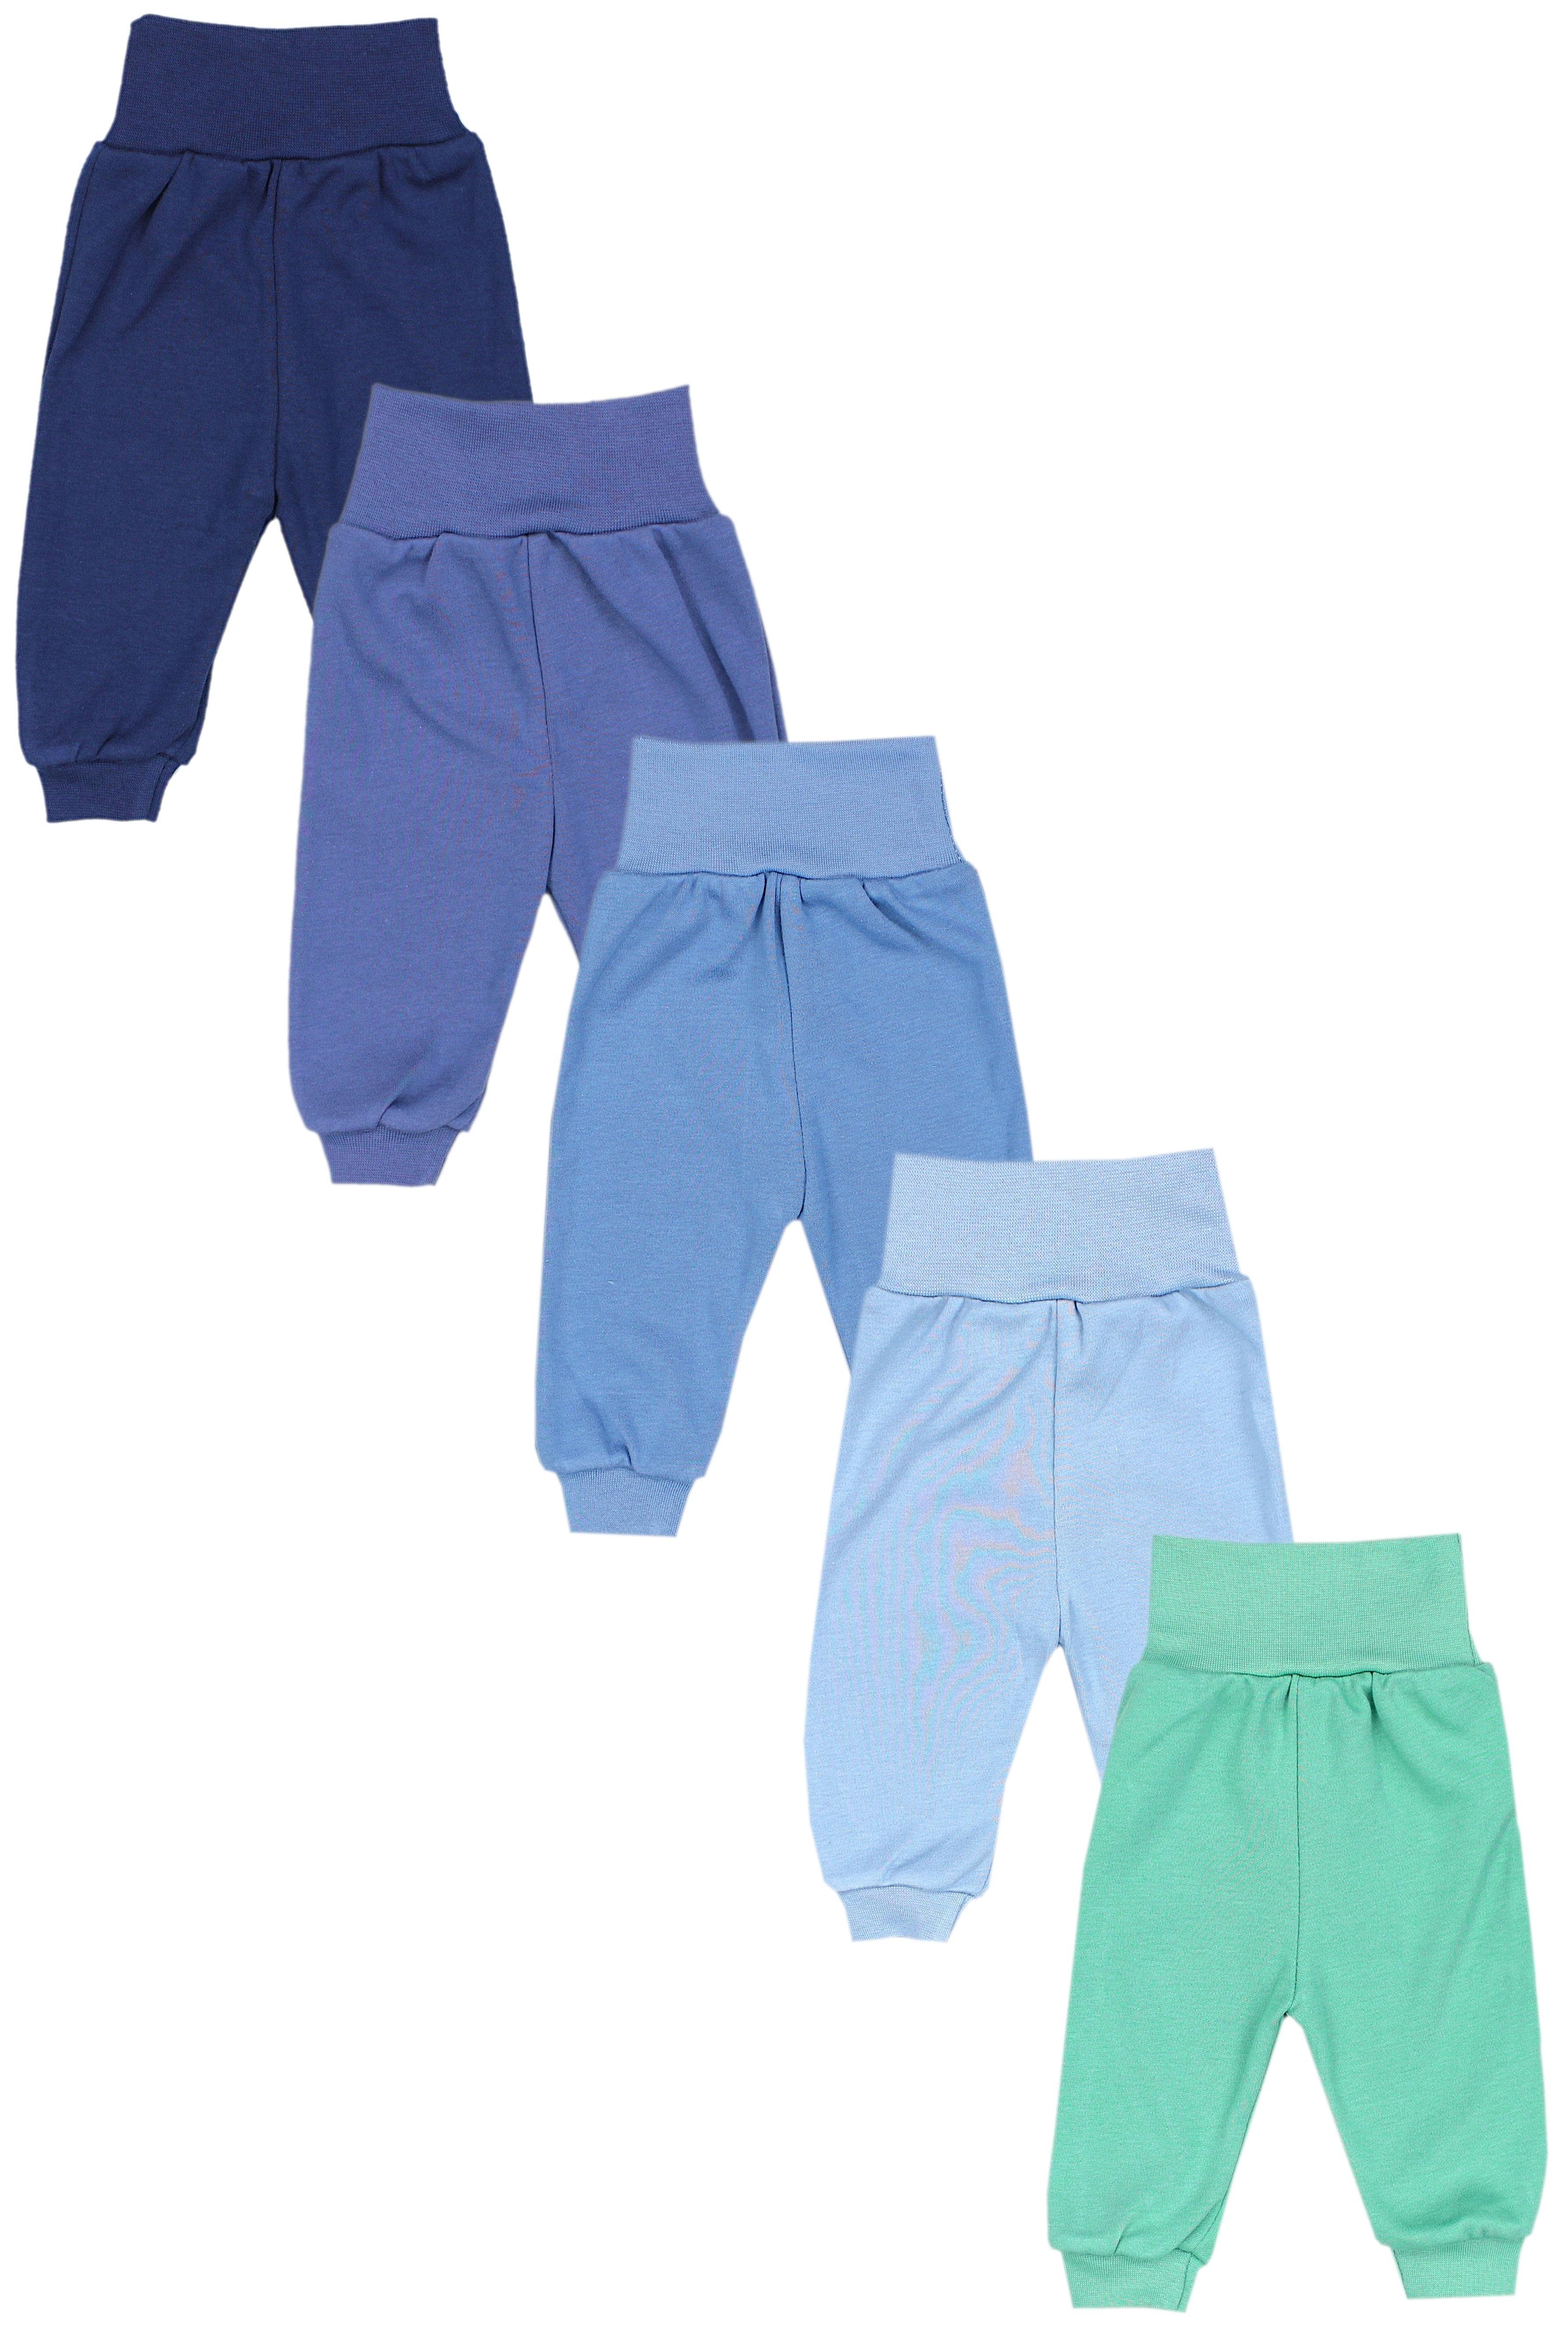 Pack Langhose TupTam 5er Blau zertifizierten Materialien unisex OEKO-Tex Dunkelblau Jeans Pumphose Mintgrün aus